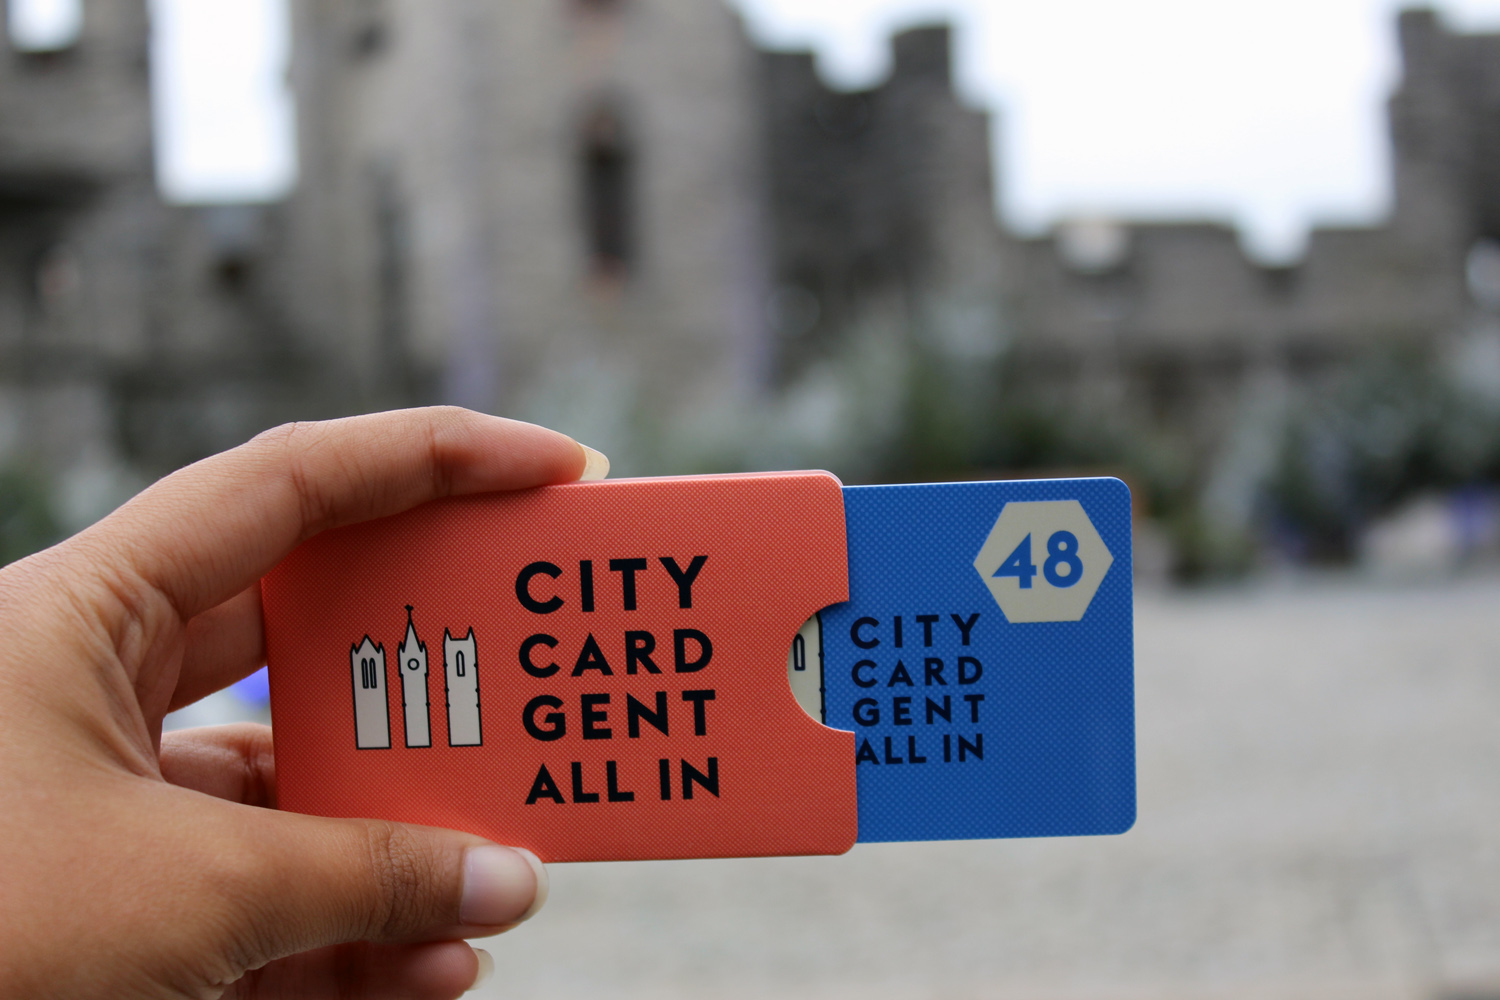 Ghent City Card